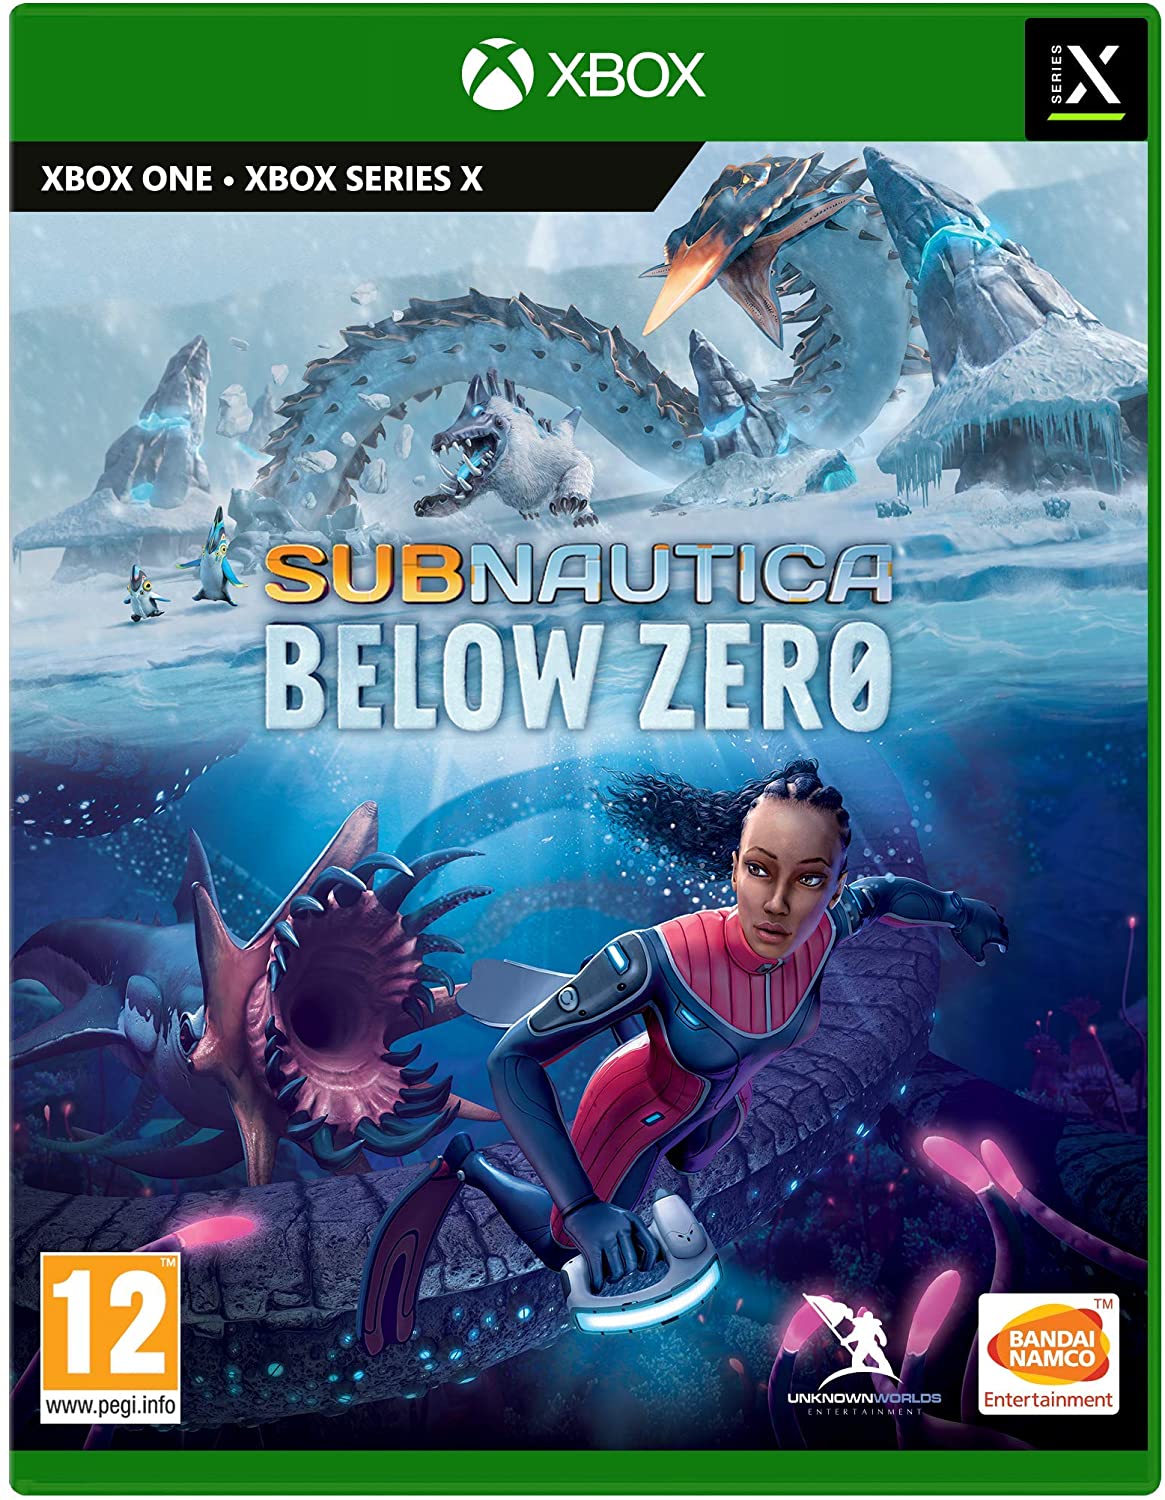 Subnautica: Below Zero Digital Download Key (Xbox One/Series X): Europe